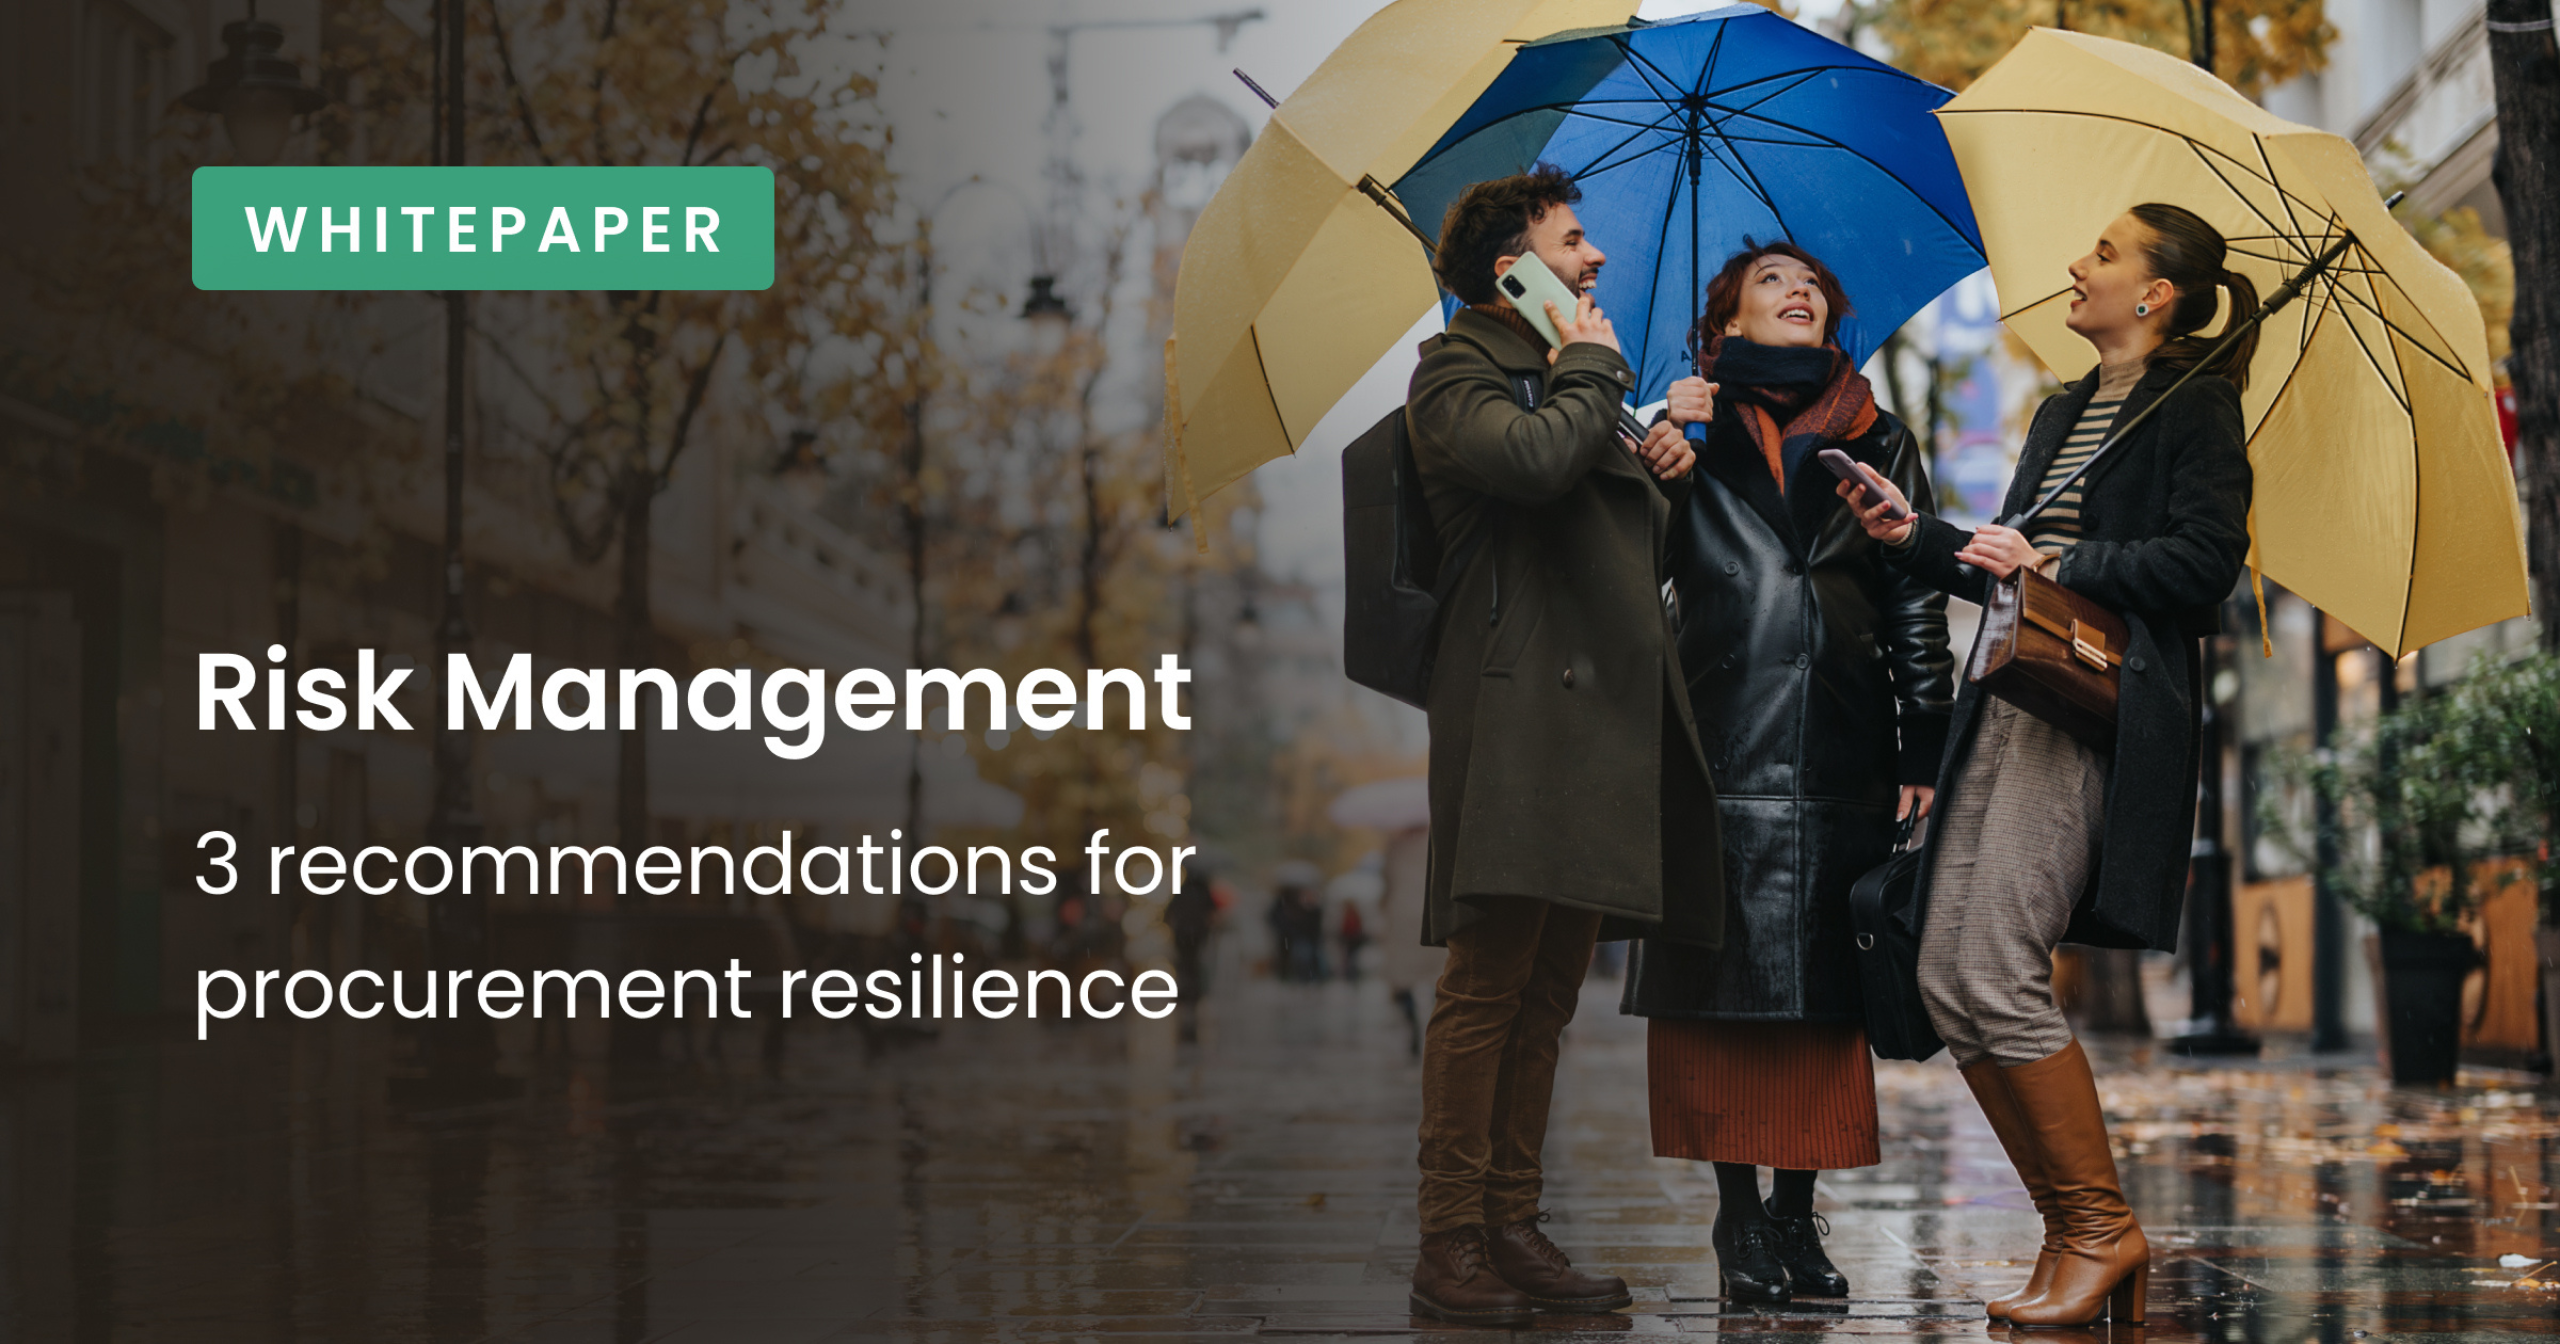 Risk Management: 3 recommendations for procurement resilience